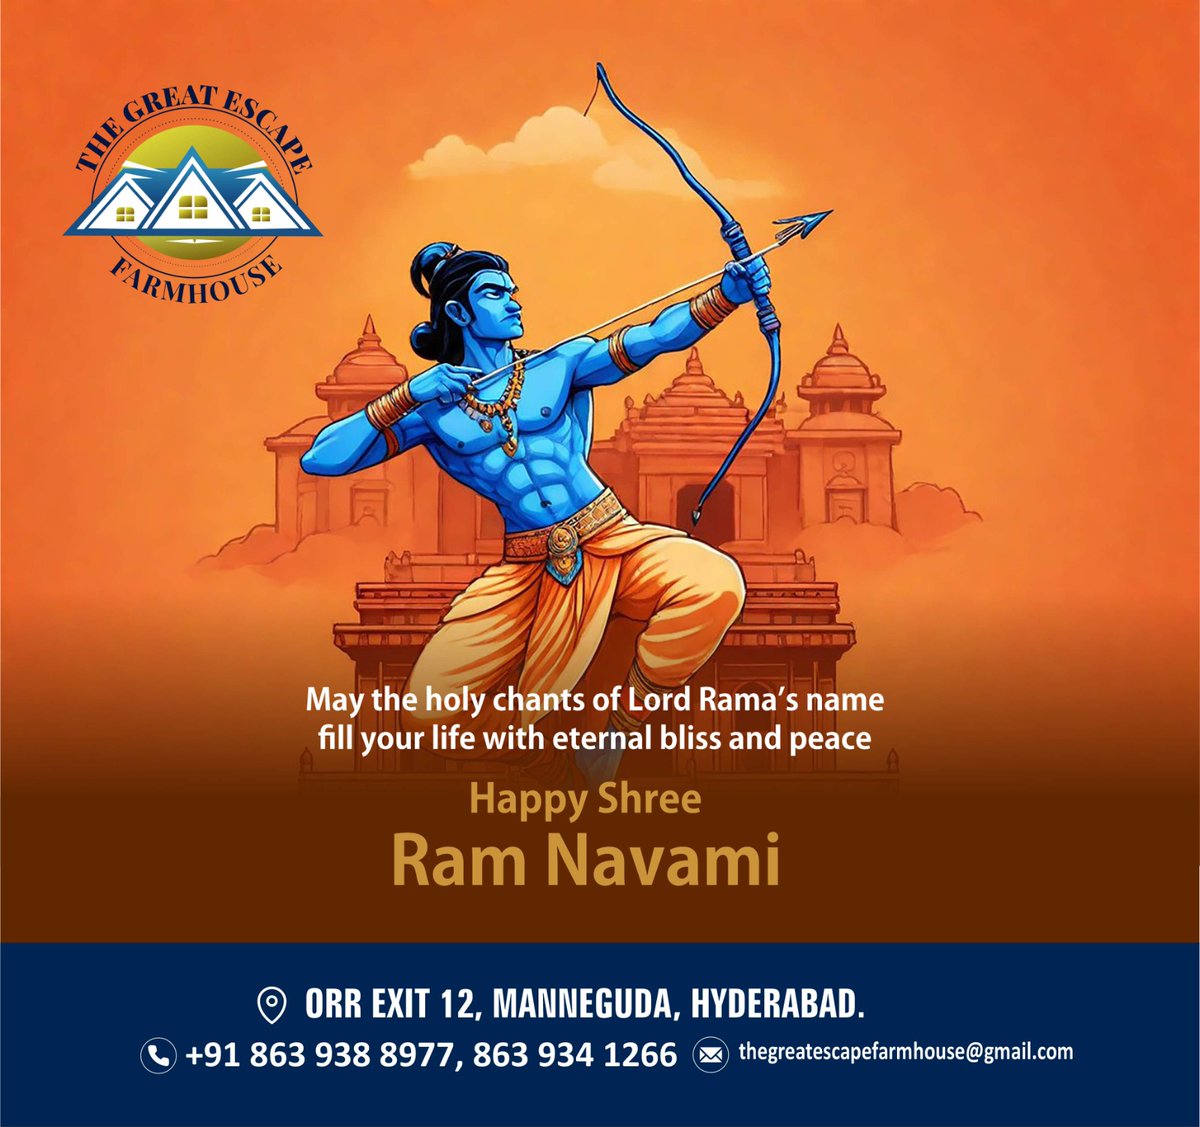 Happy Rama Navami! May the divine chants of 'Jai Shri Ram' resonate in our hearts
Please contact us: +91 86393 88977
Email Address : thegreatescapefarmhouse@gmail.com
#RamaNavami
#JaiShriRam
#LordRama
#DivineCelebration
#RamNavami2024
#BlessingsOfRama
#SpiritualJourney
#Festival